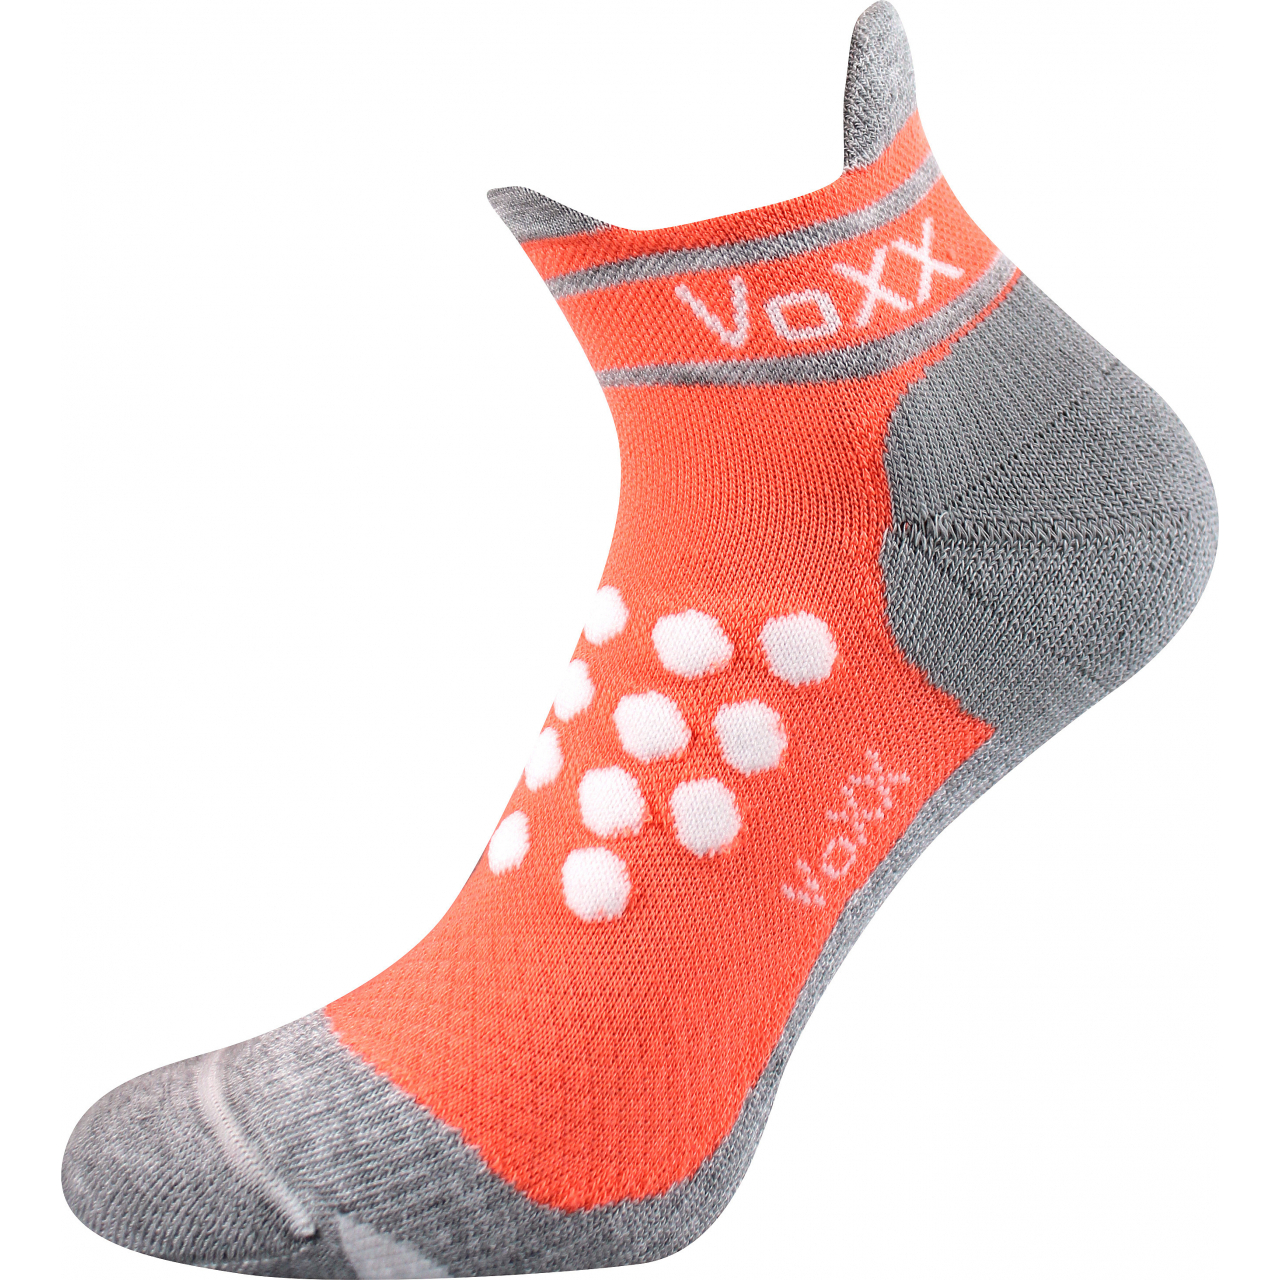 Ponožky unisex sportovní Voxx Sprinter - oranžové-šedé, 39-42